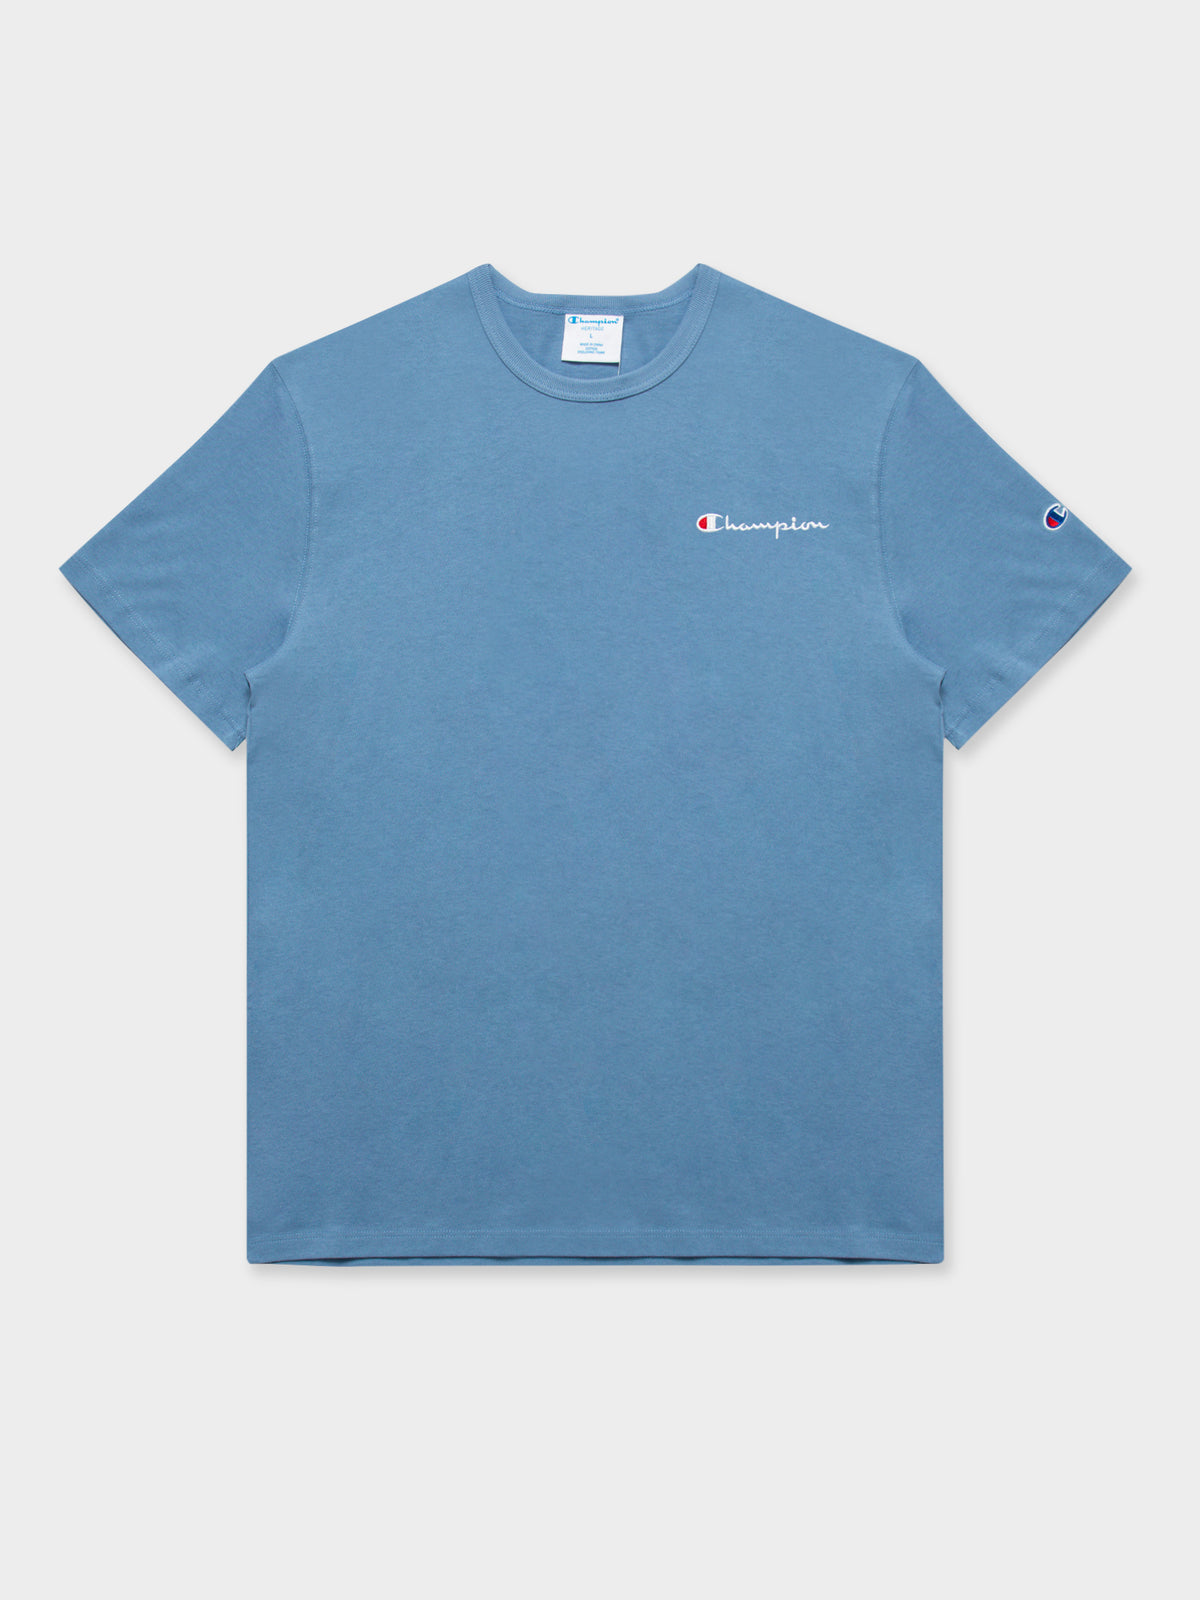 Heritage T-Shirt in Frontier Blue